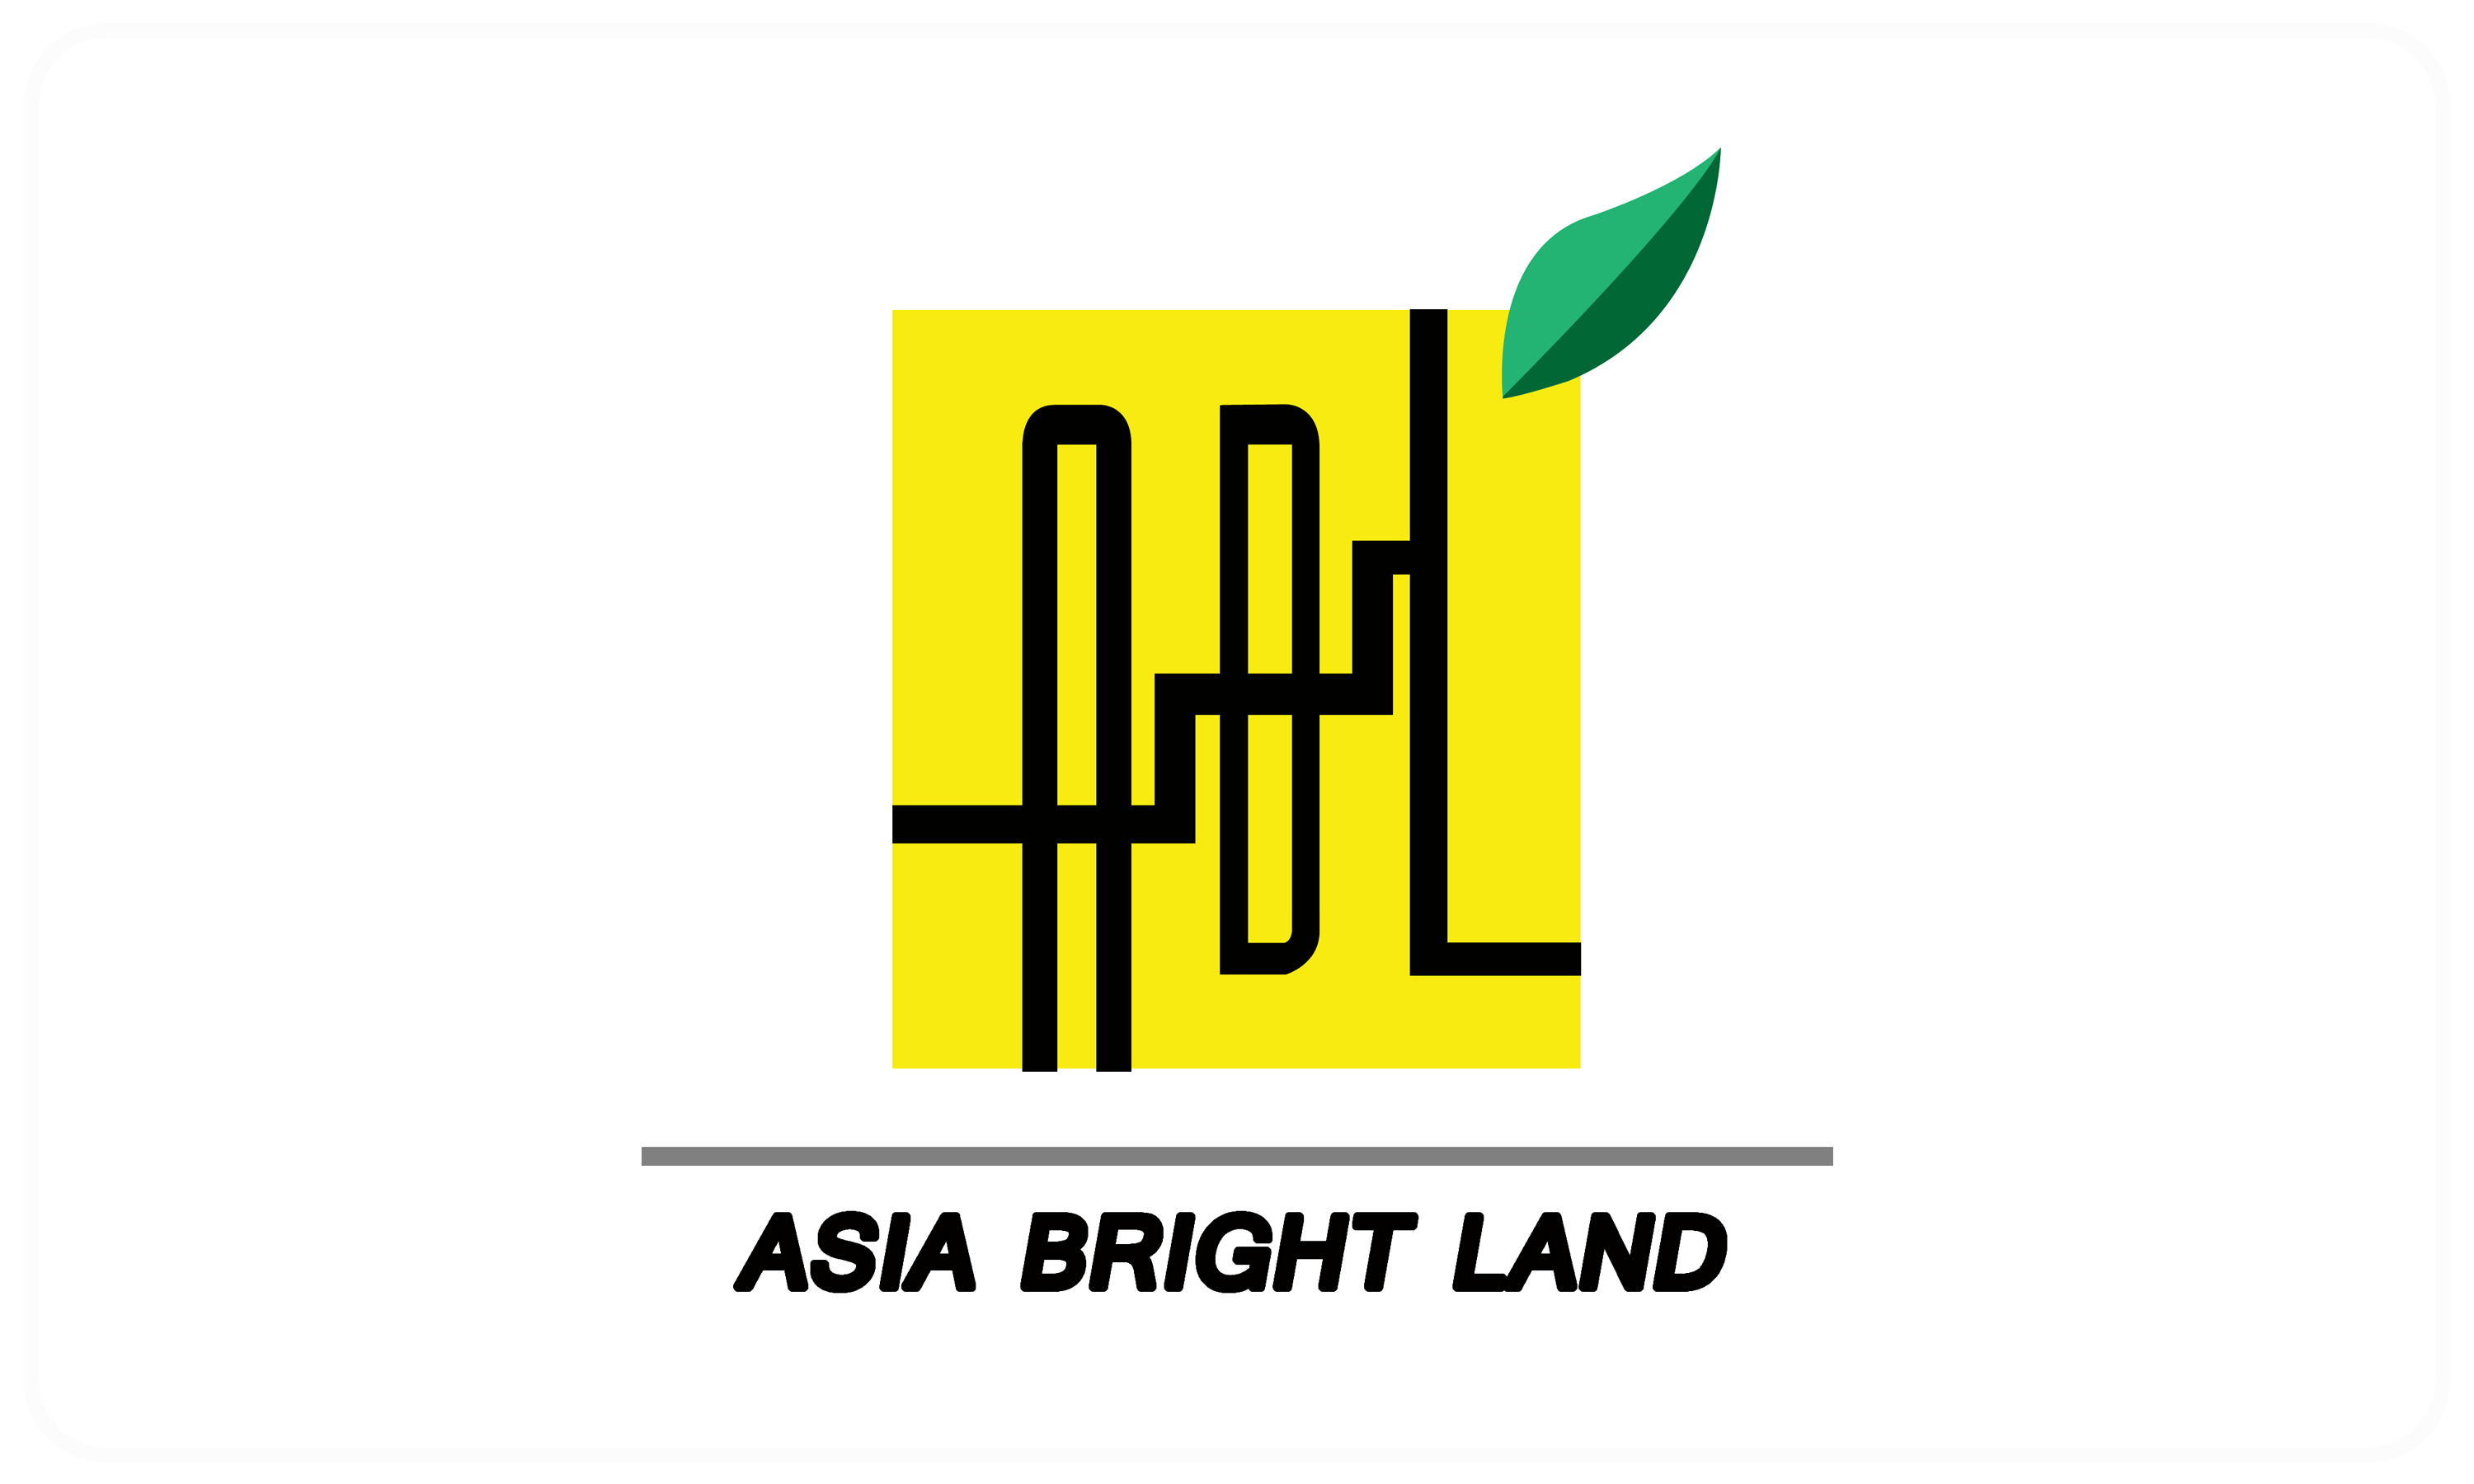 Asia Bright Land